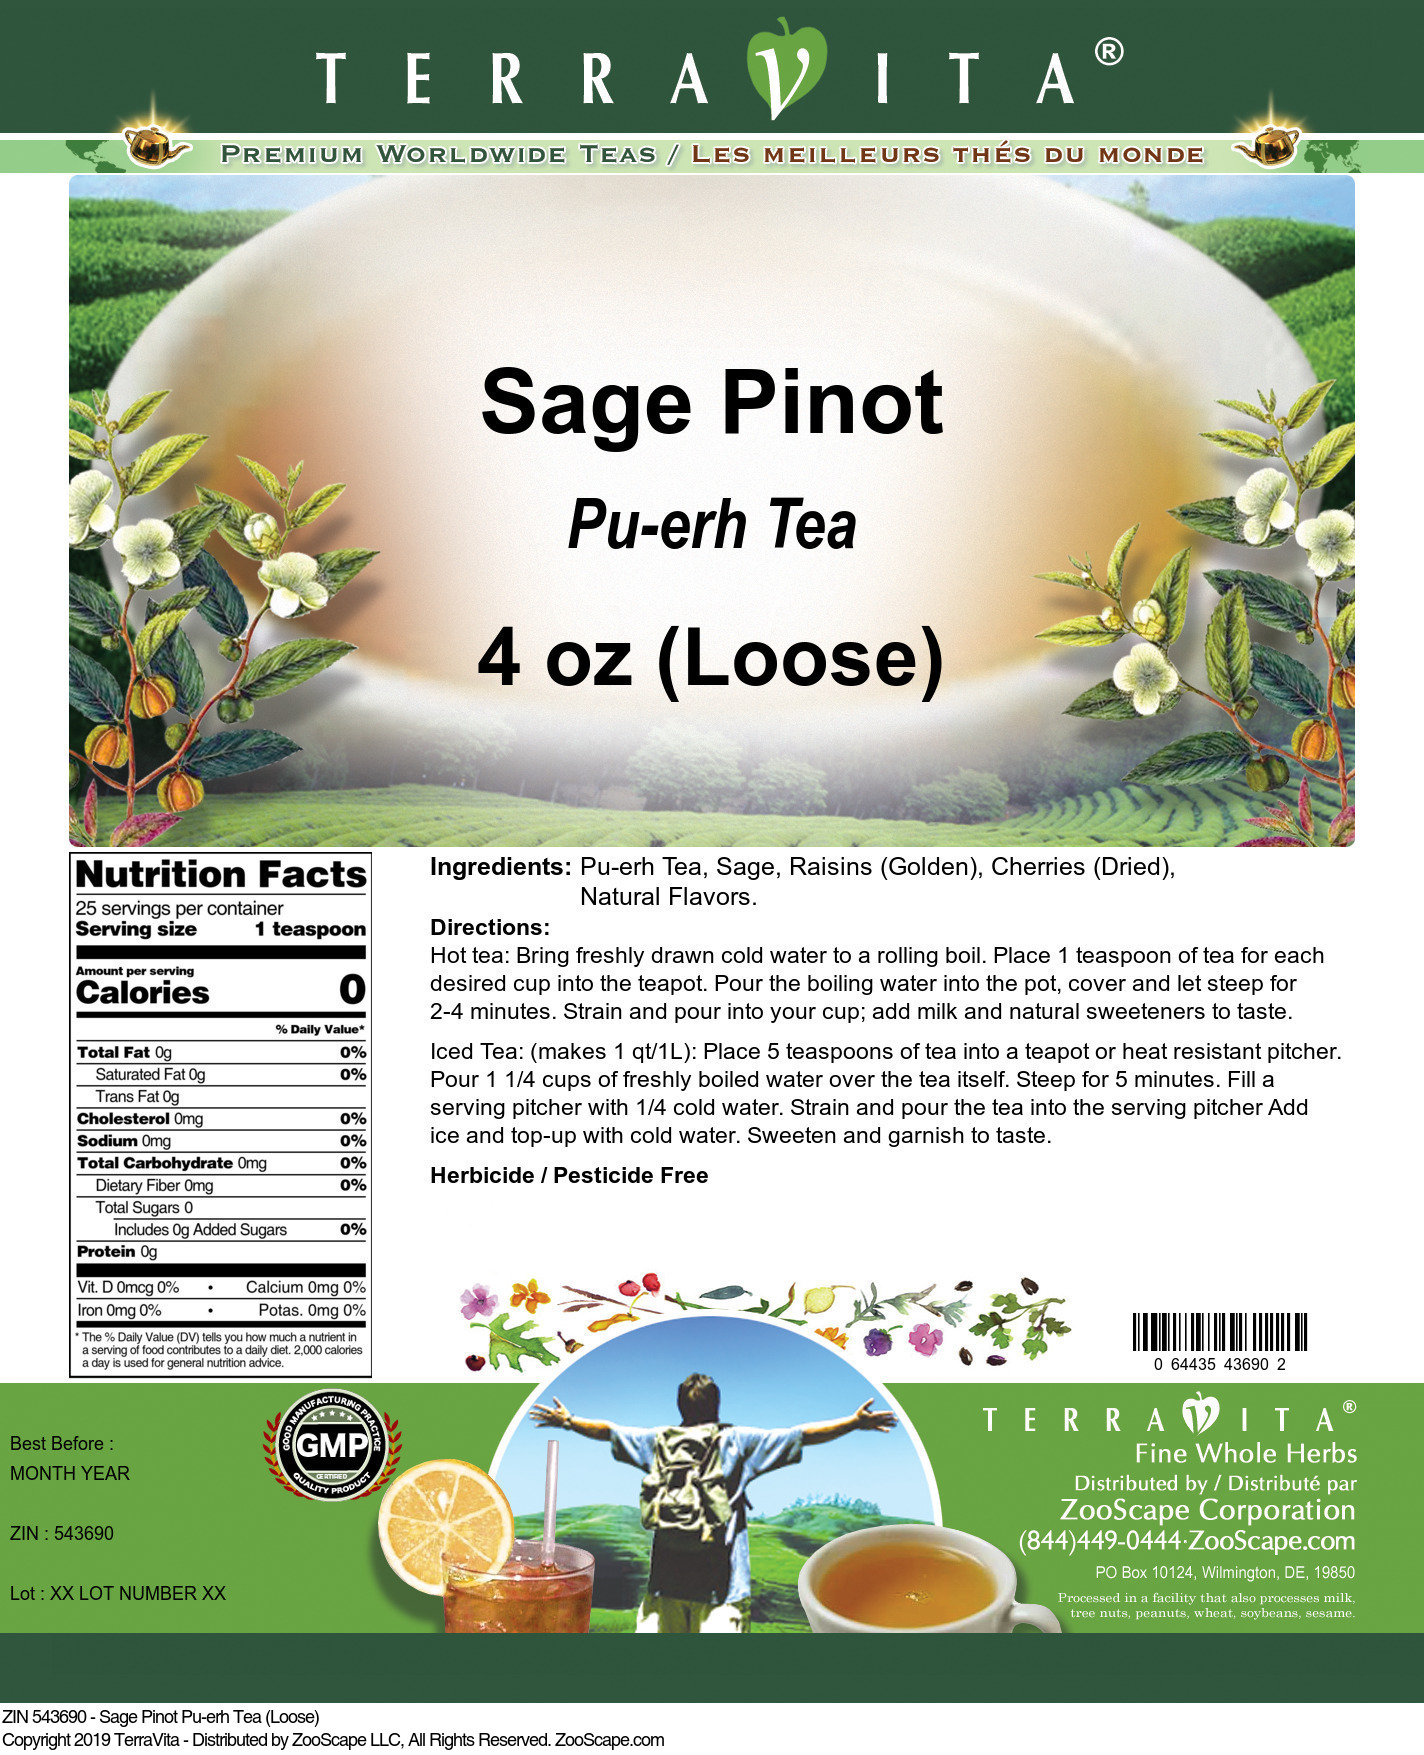 Sage Pinot Pu-erh Tea (Loose) - Label